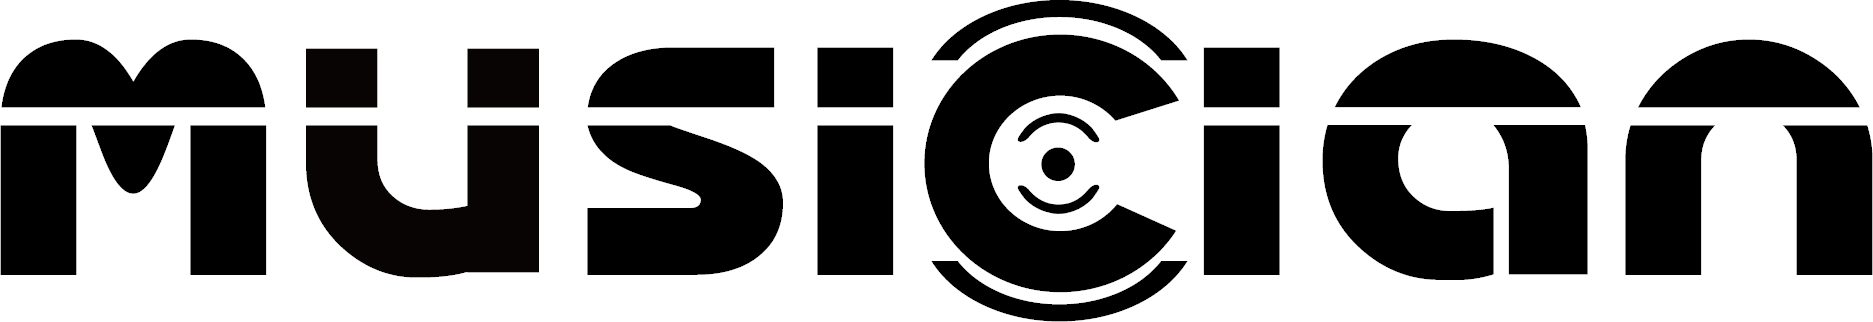 Musician logo